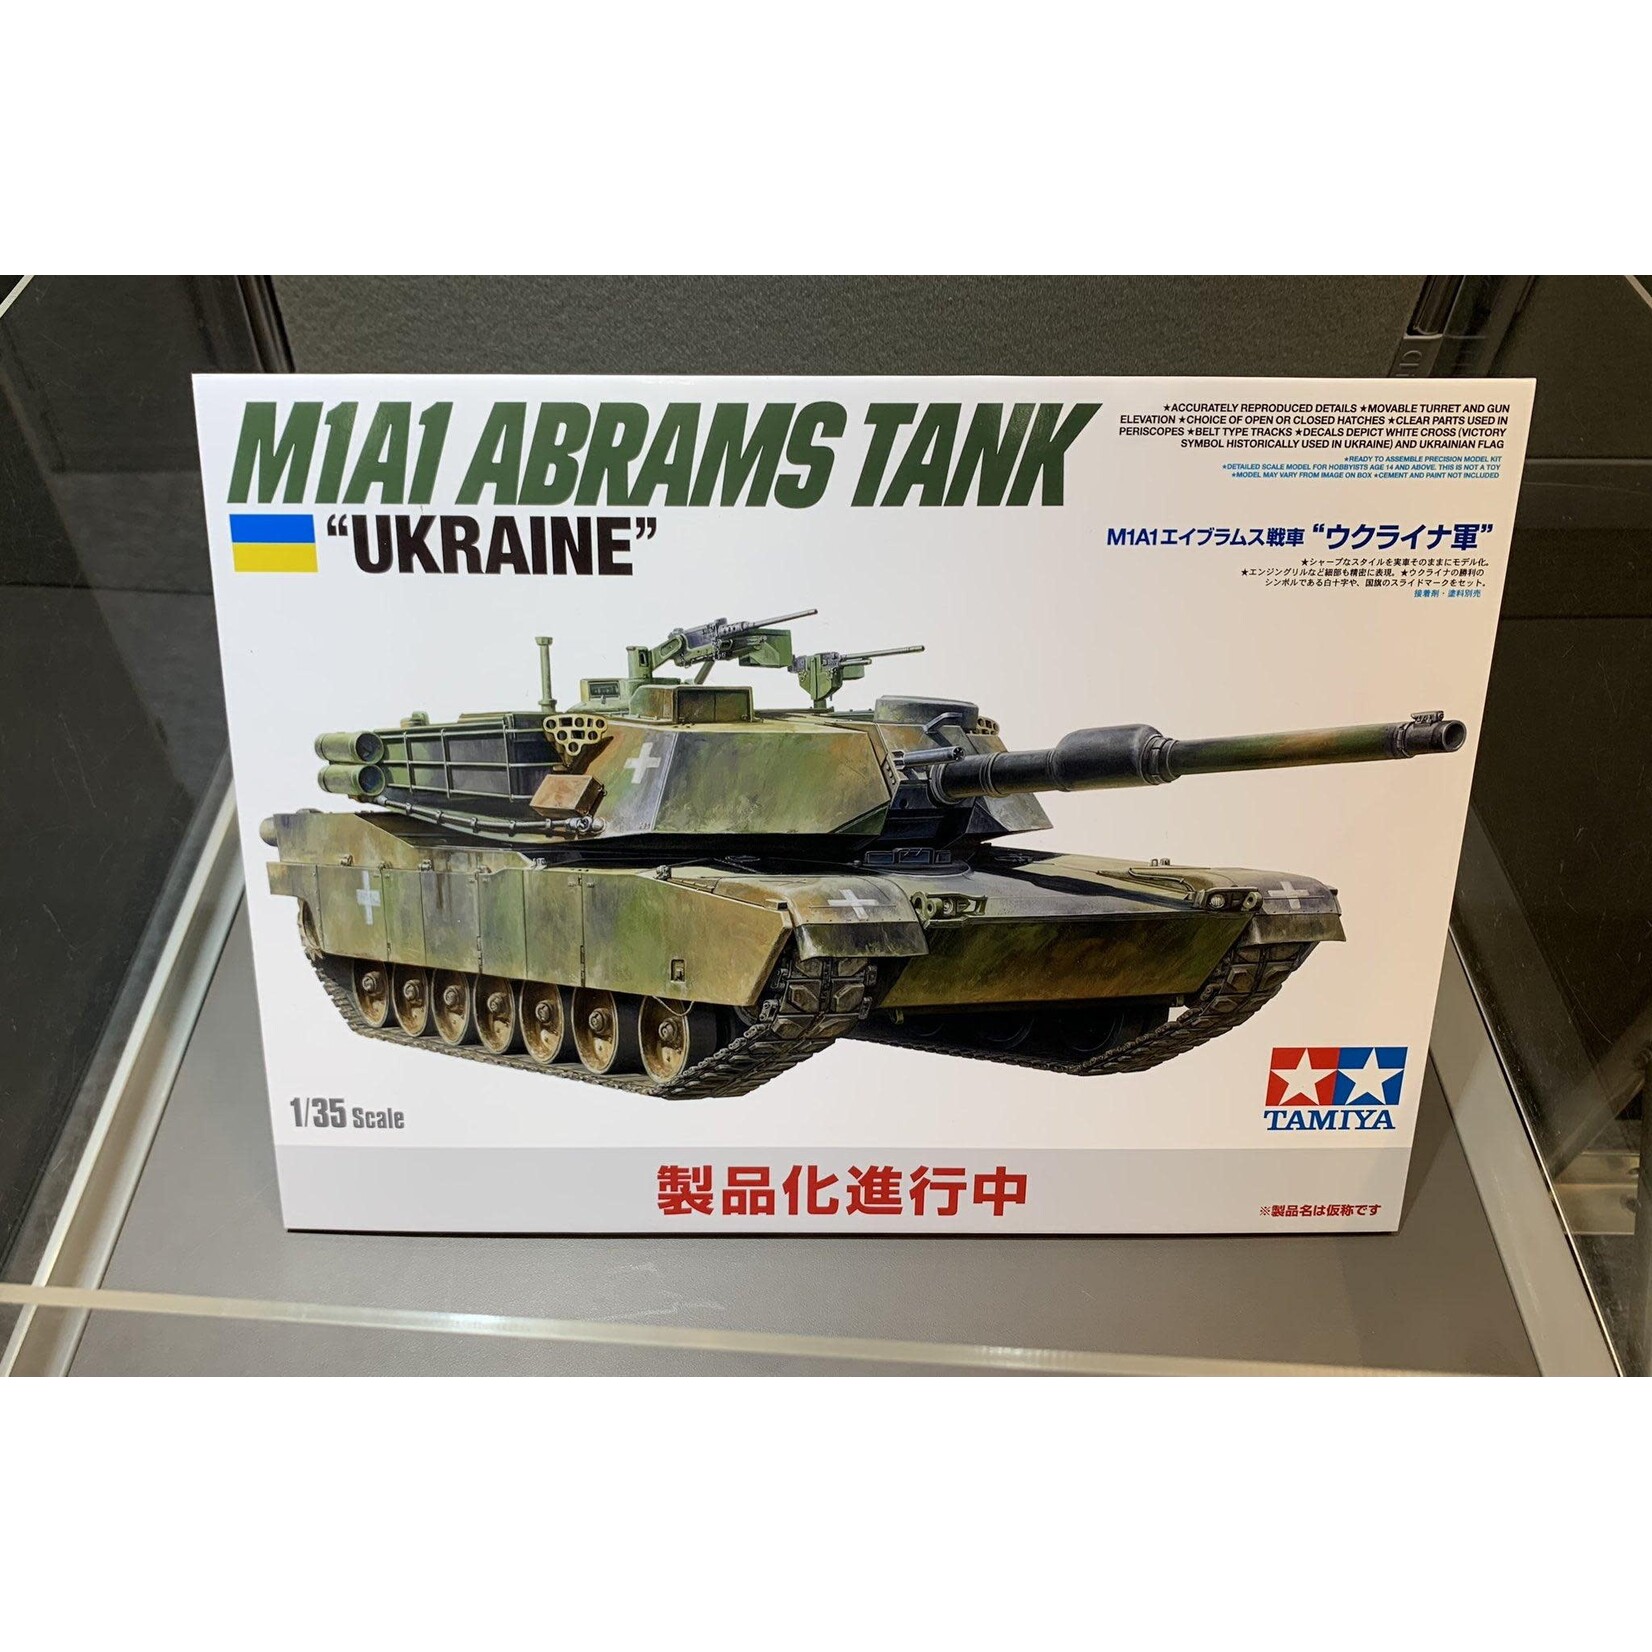 Tamiya 1/35 M1A1 Abrams Tank "Ukraine" Kit